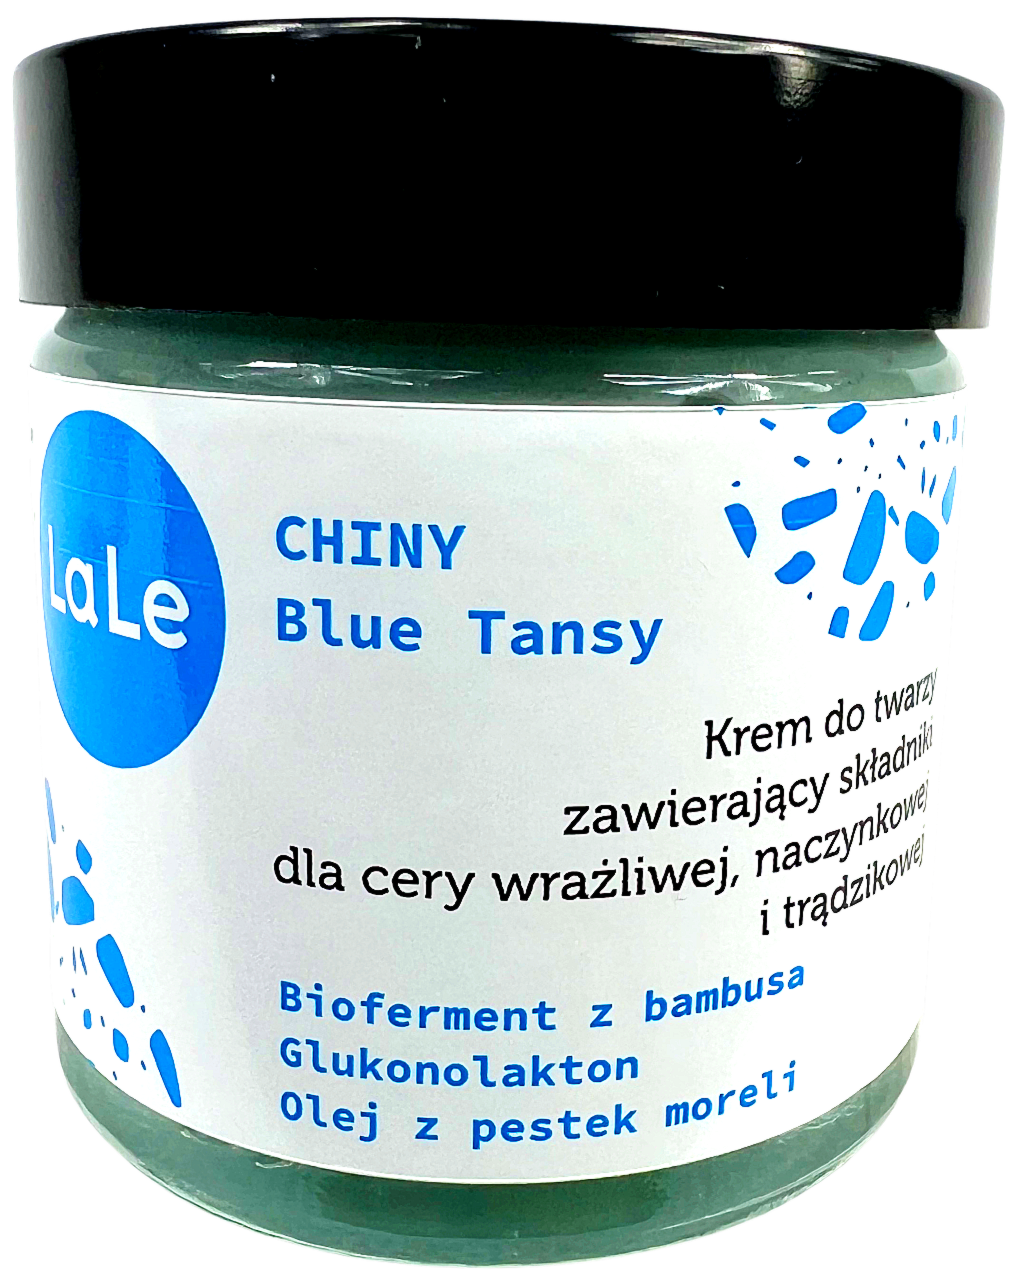 Крем для лица La-Le Chiny Blue Tansy, 60 мл